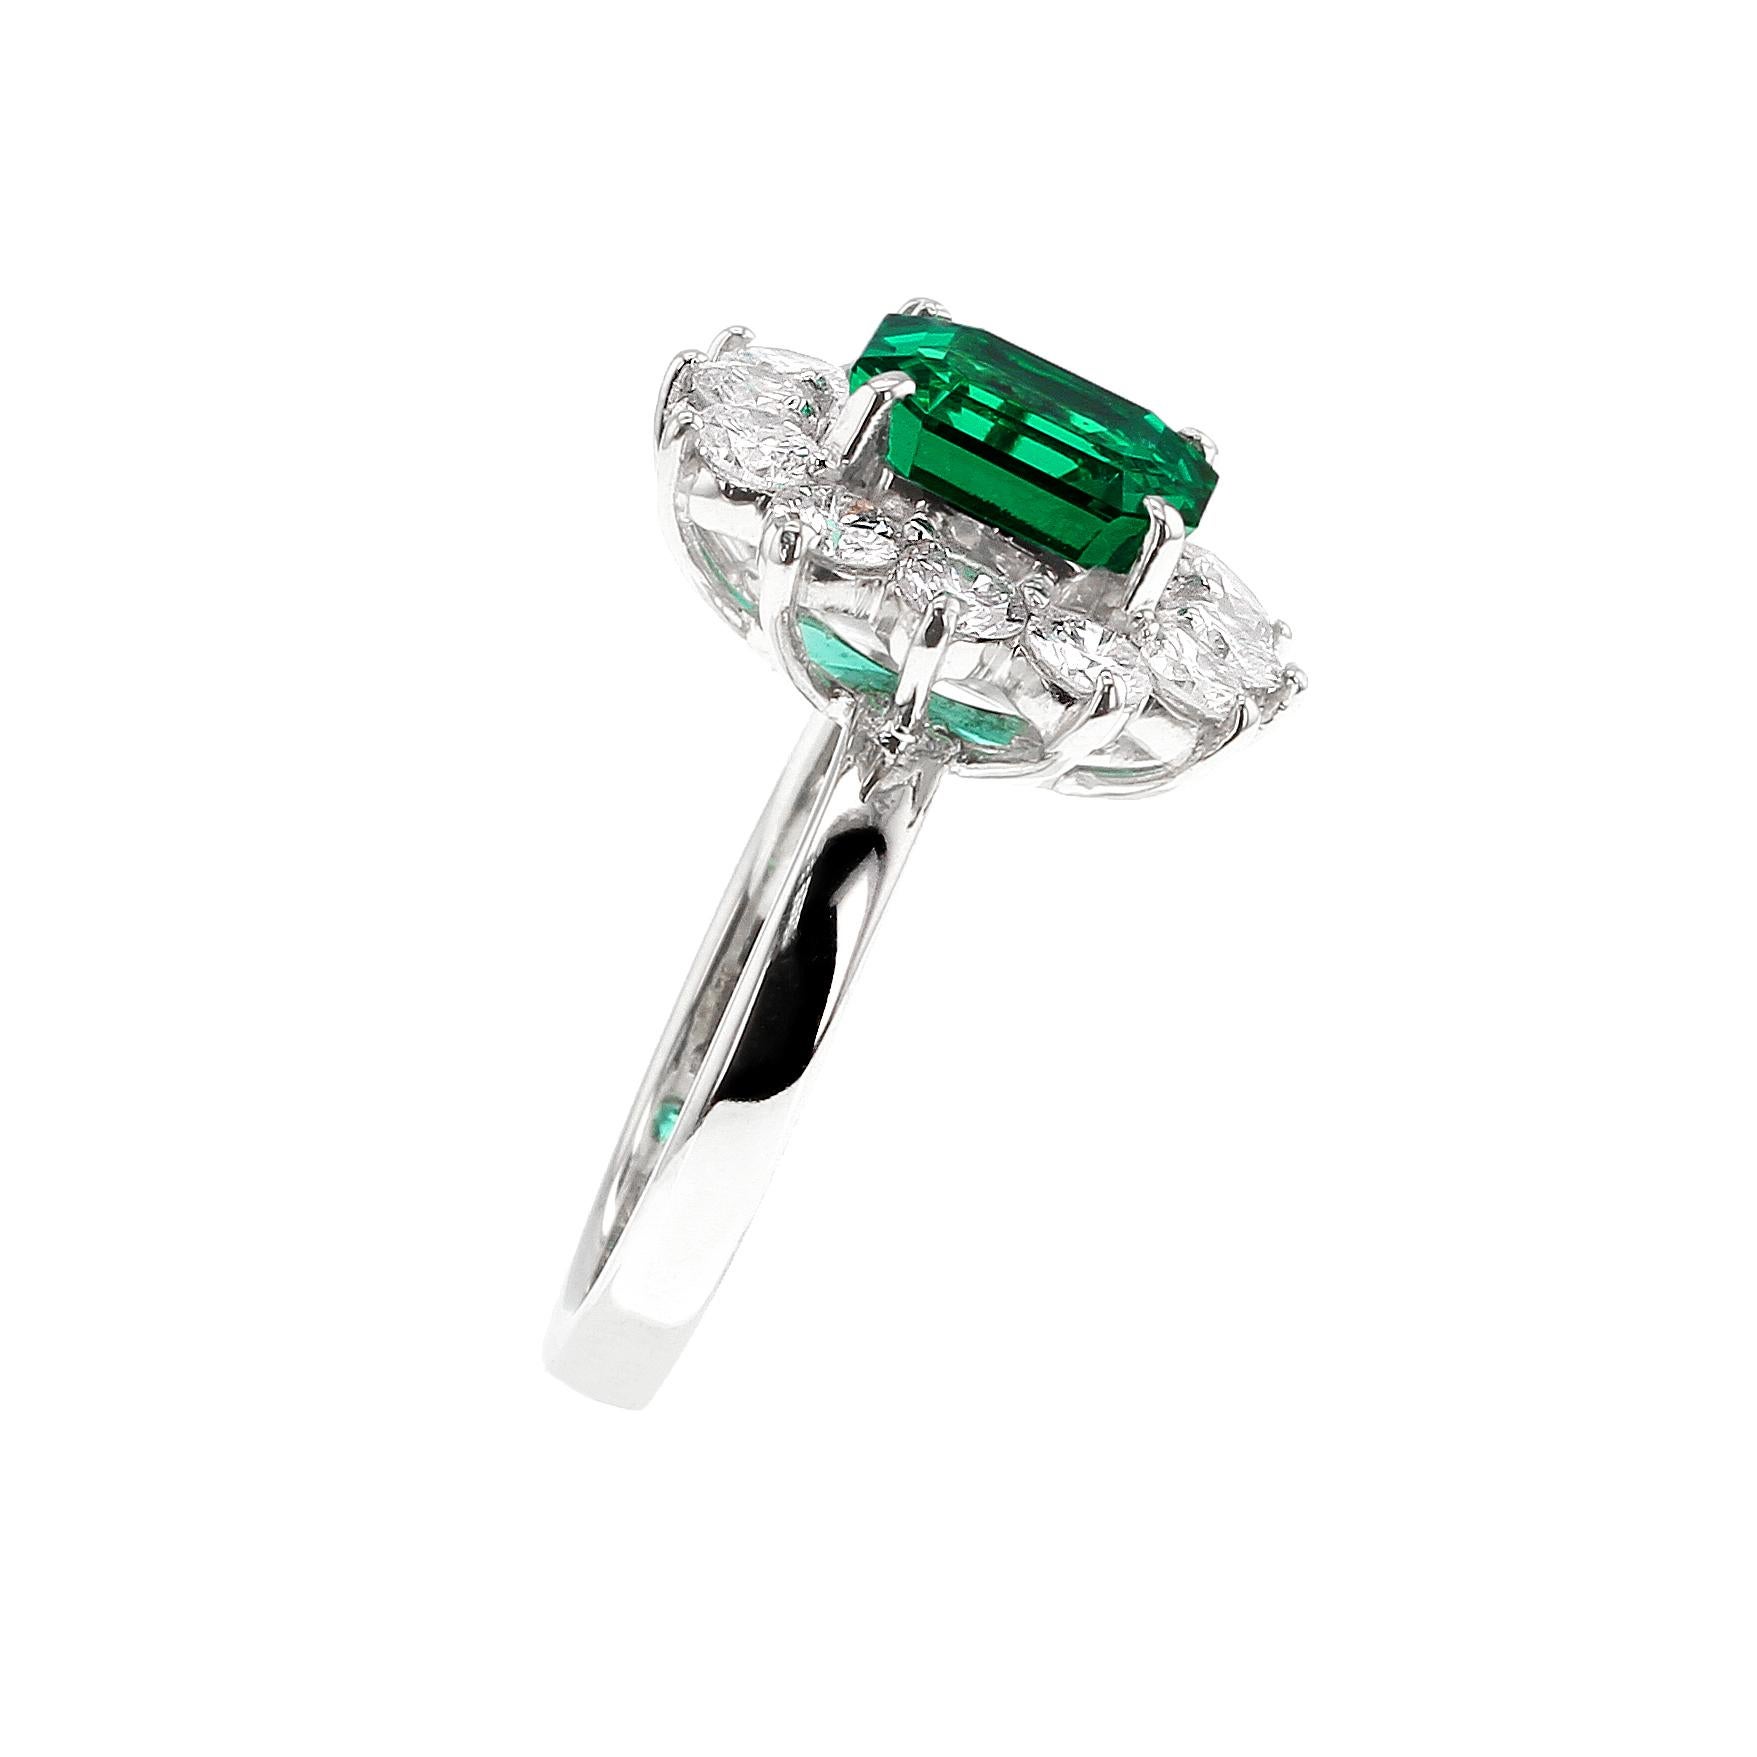 2 carat colombian emerald